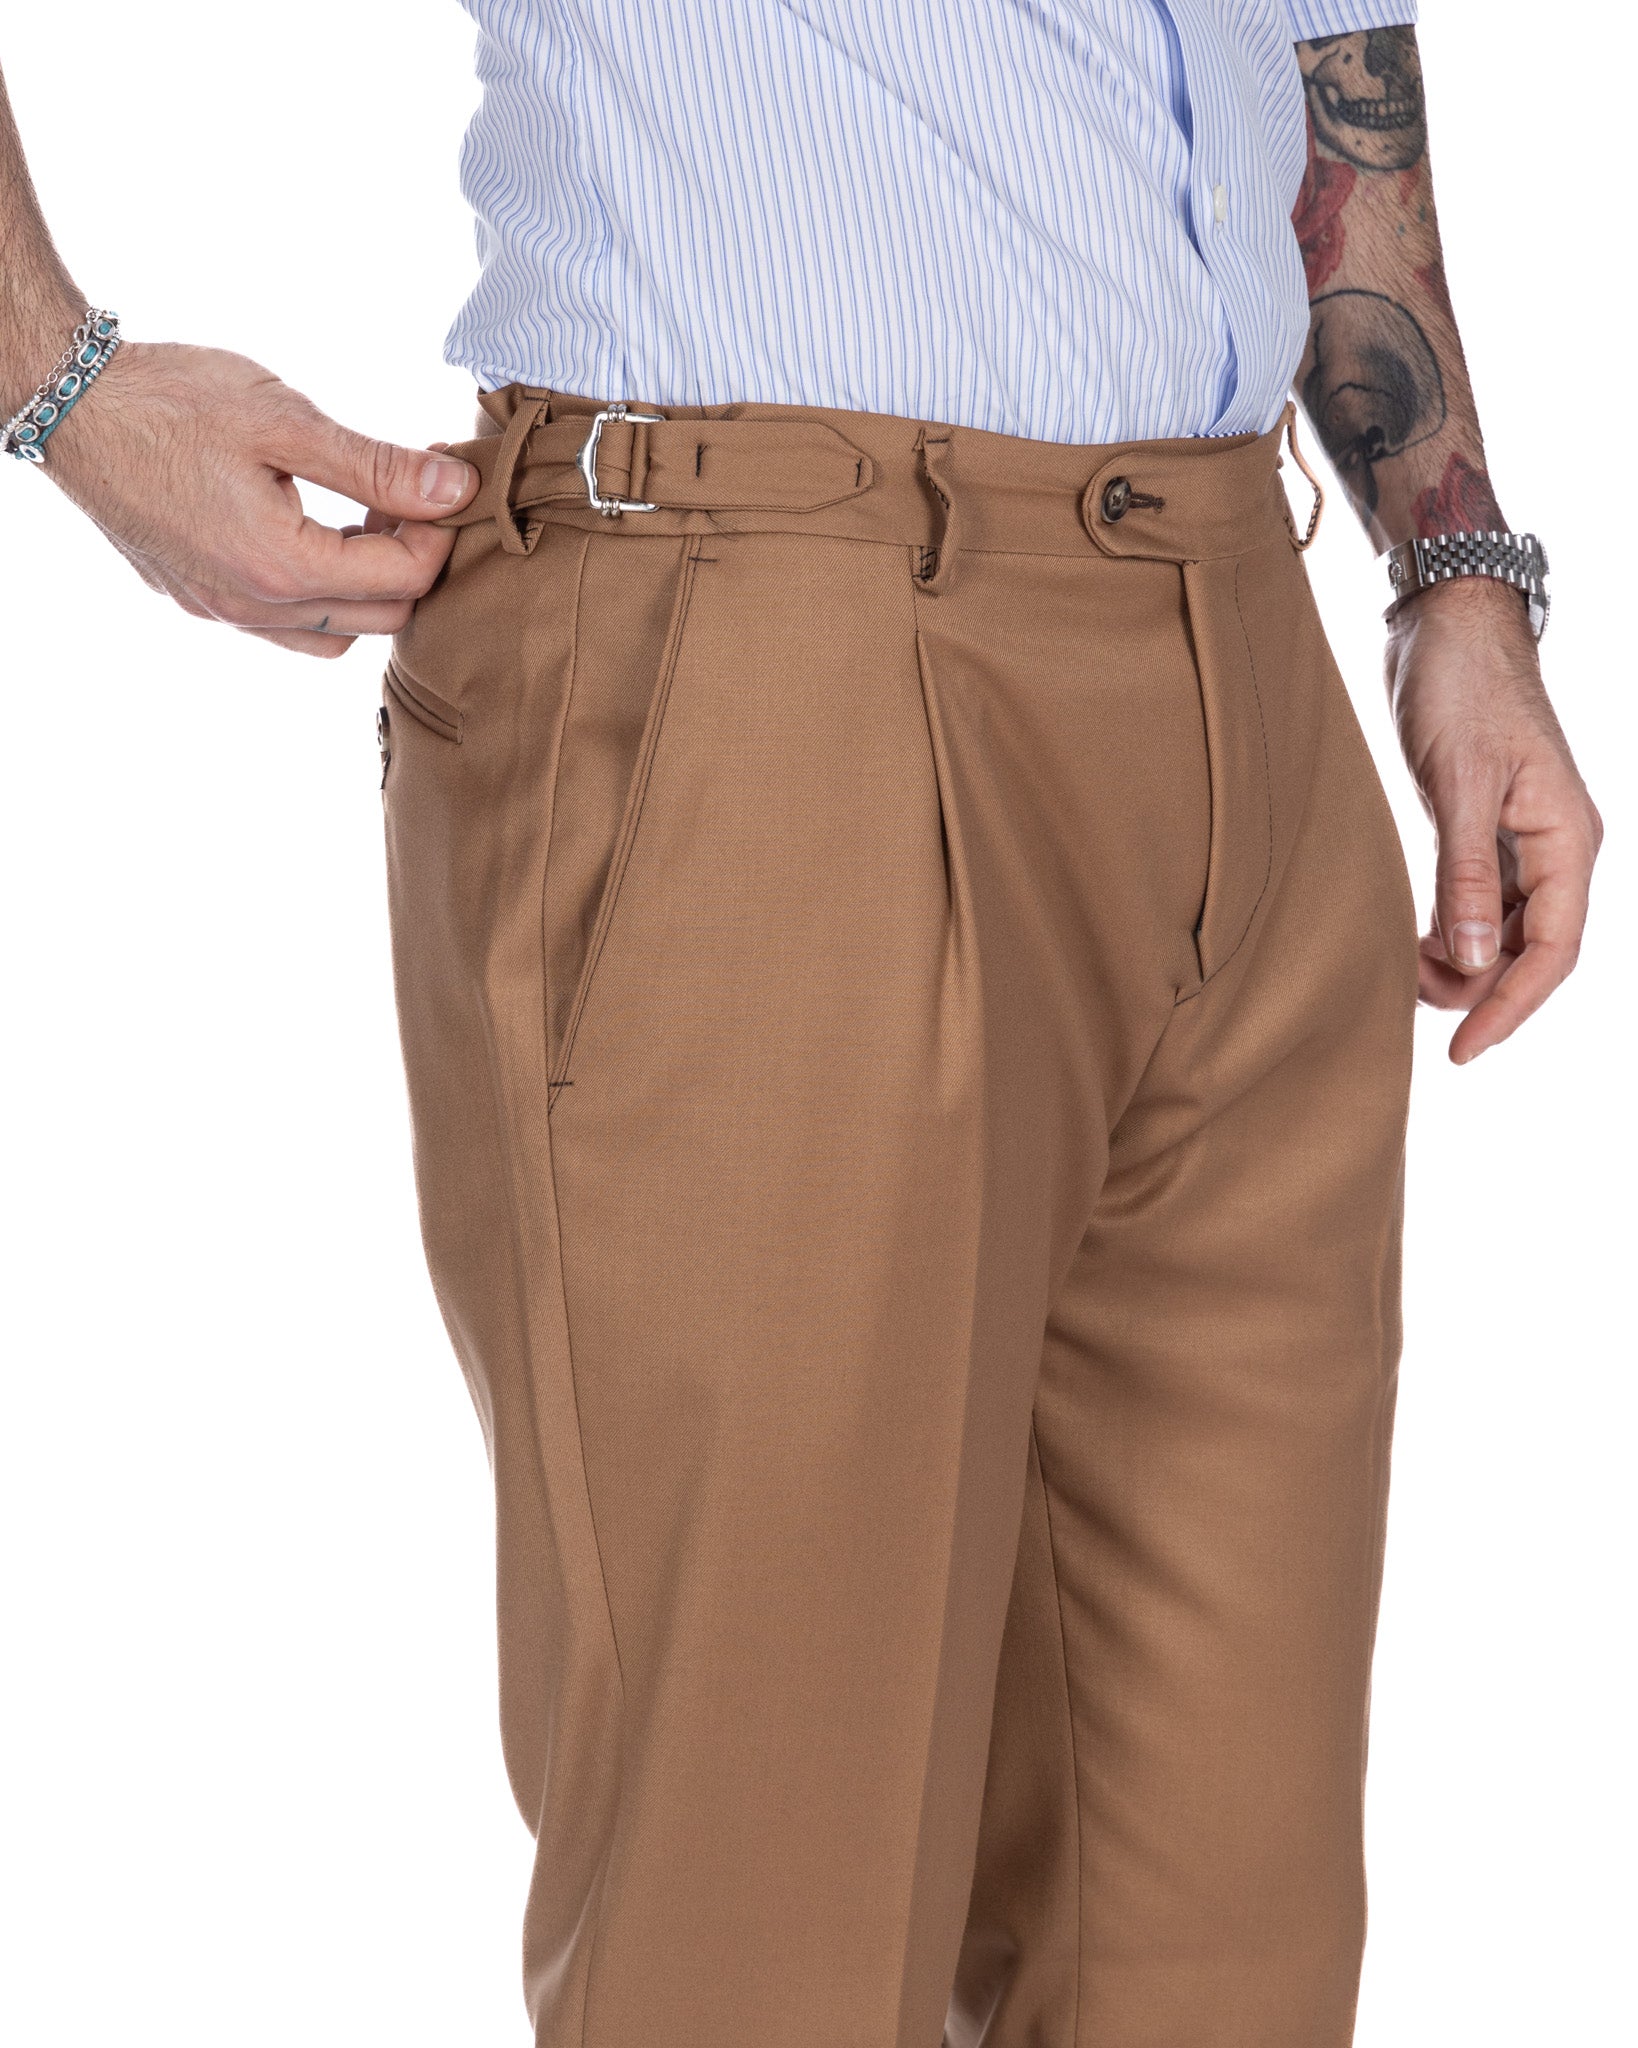 Trani - pantalon taille haute beige